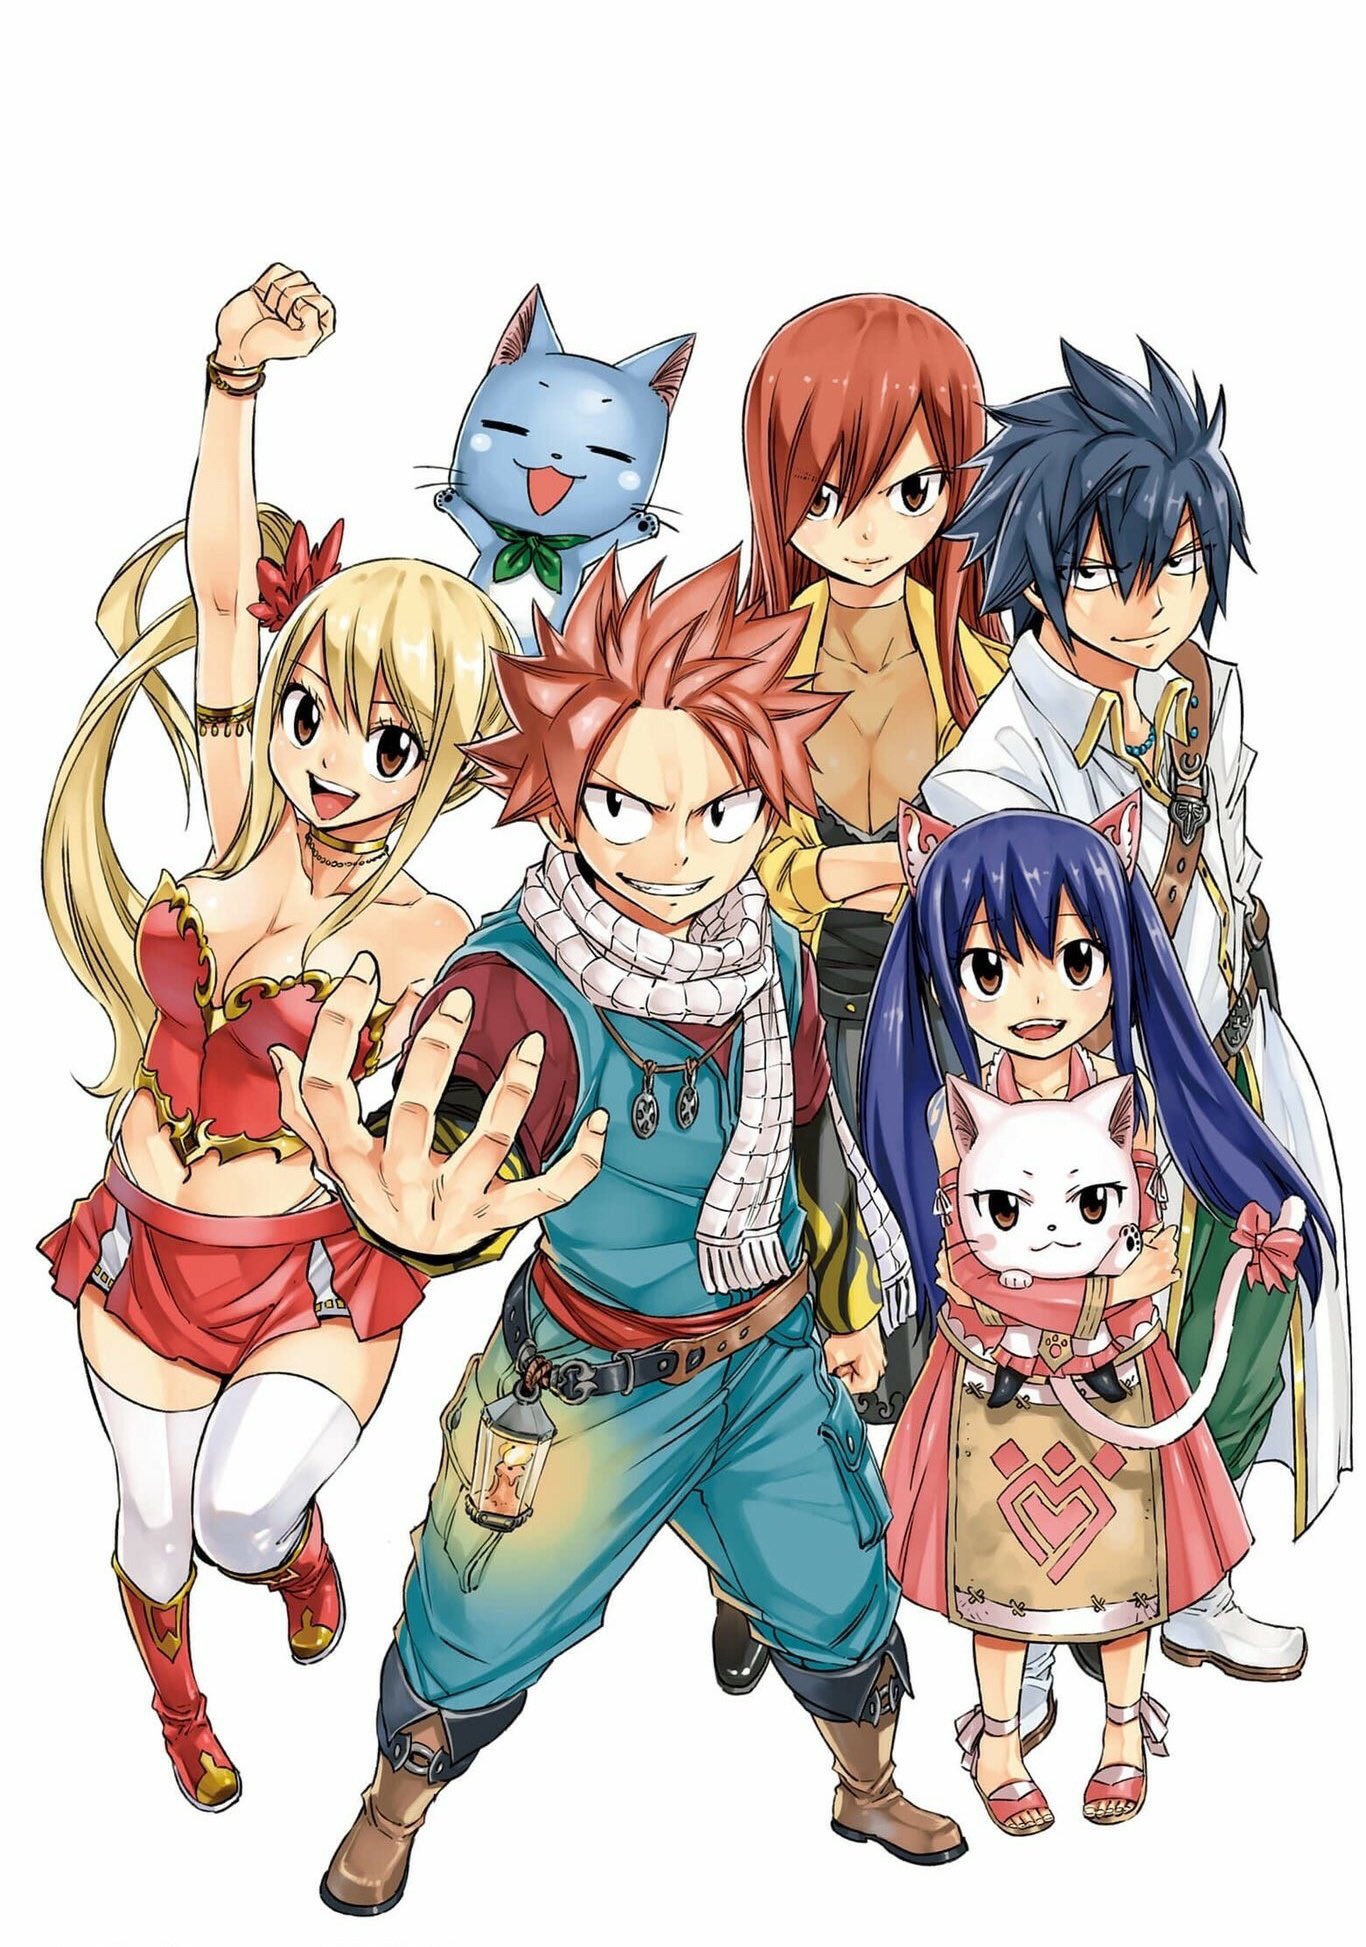 Fairy Tail Manga Review - AstroNerdBoy's Anime & Manga Blog